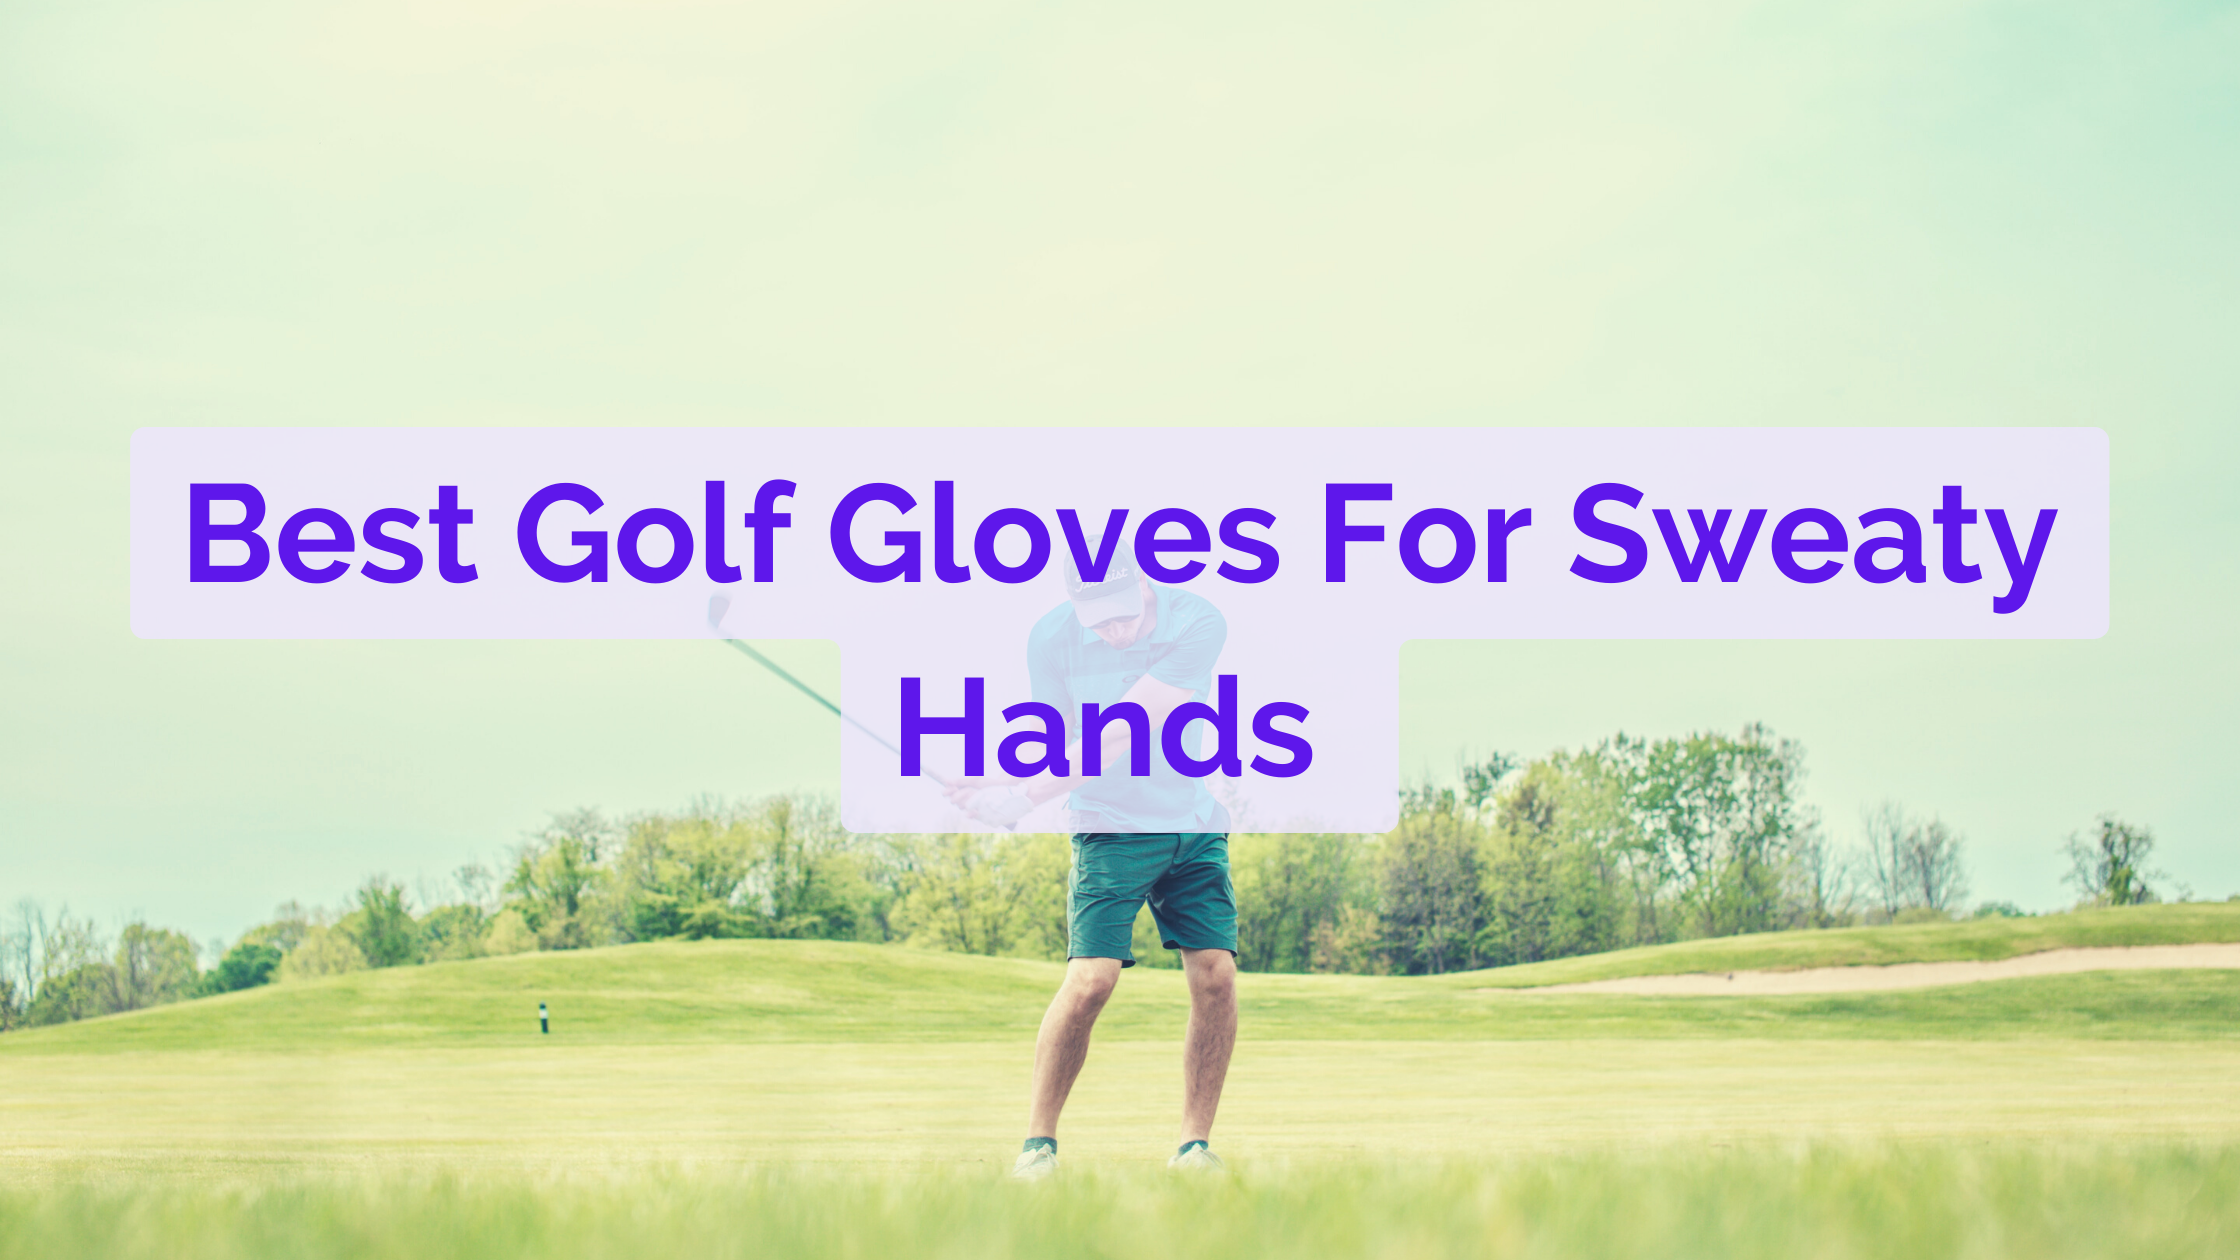 Best golf gloves for sweaty hands